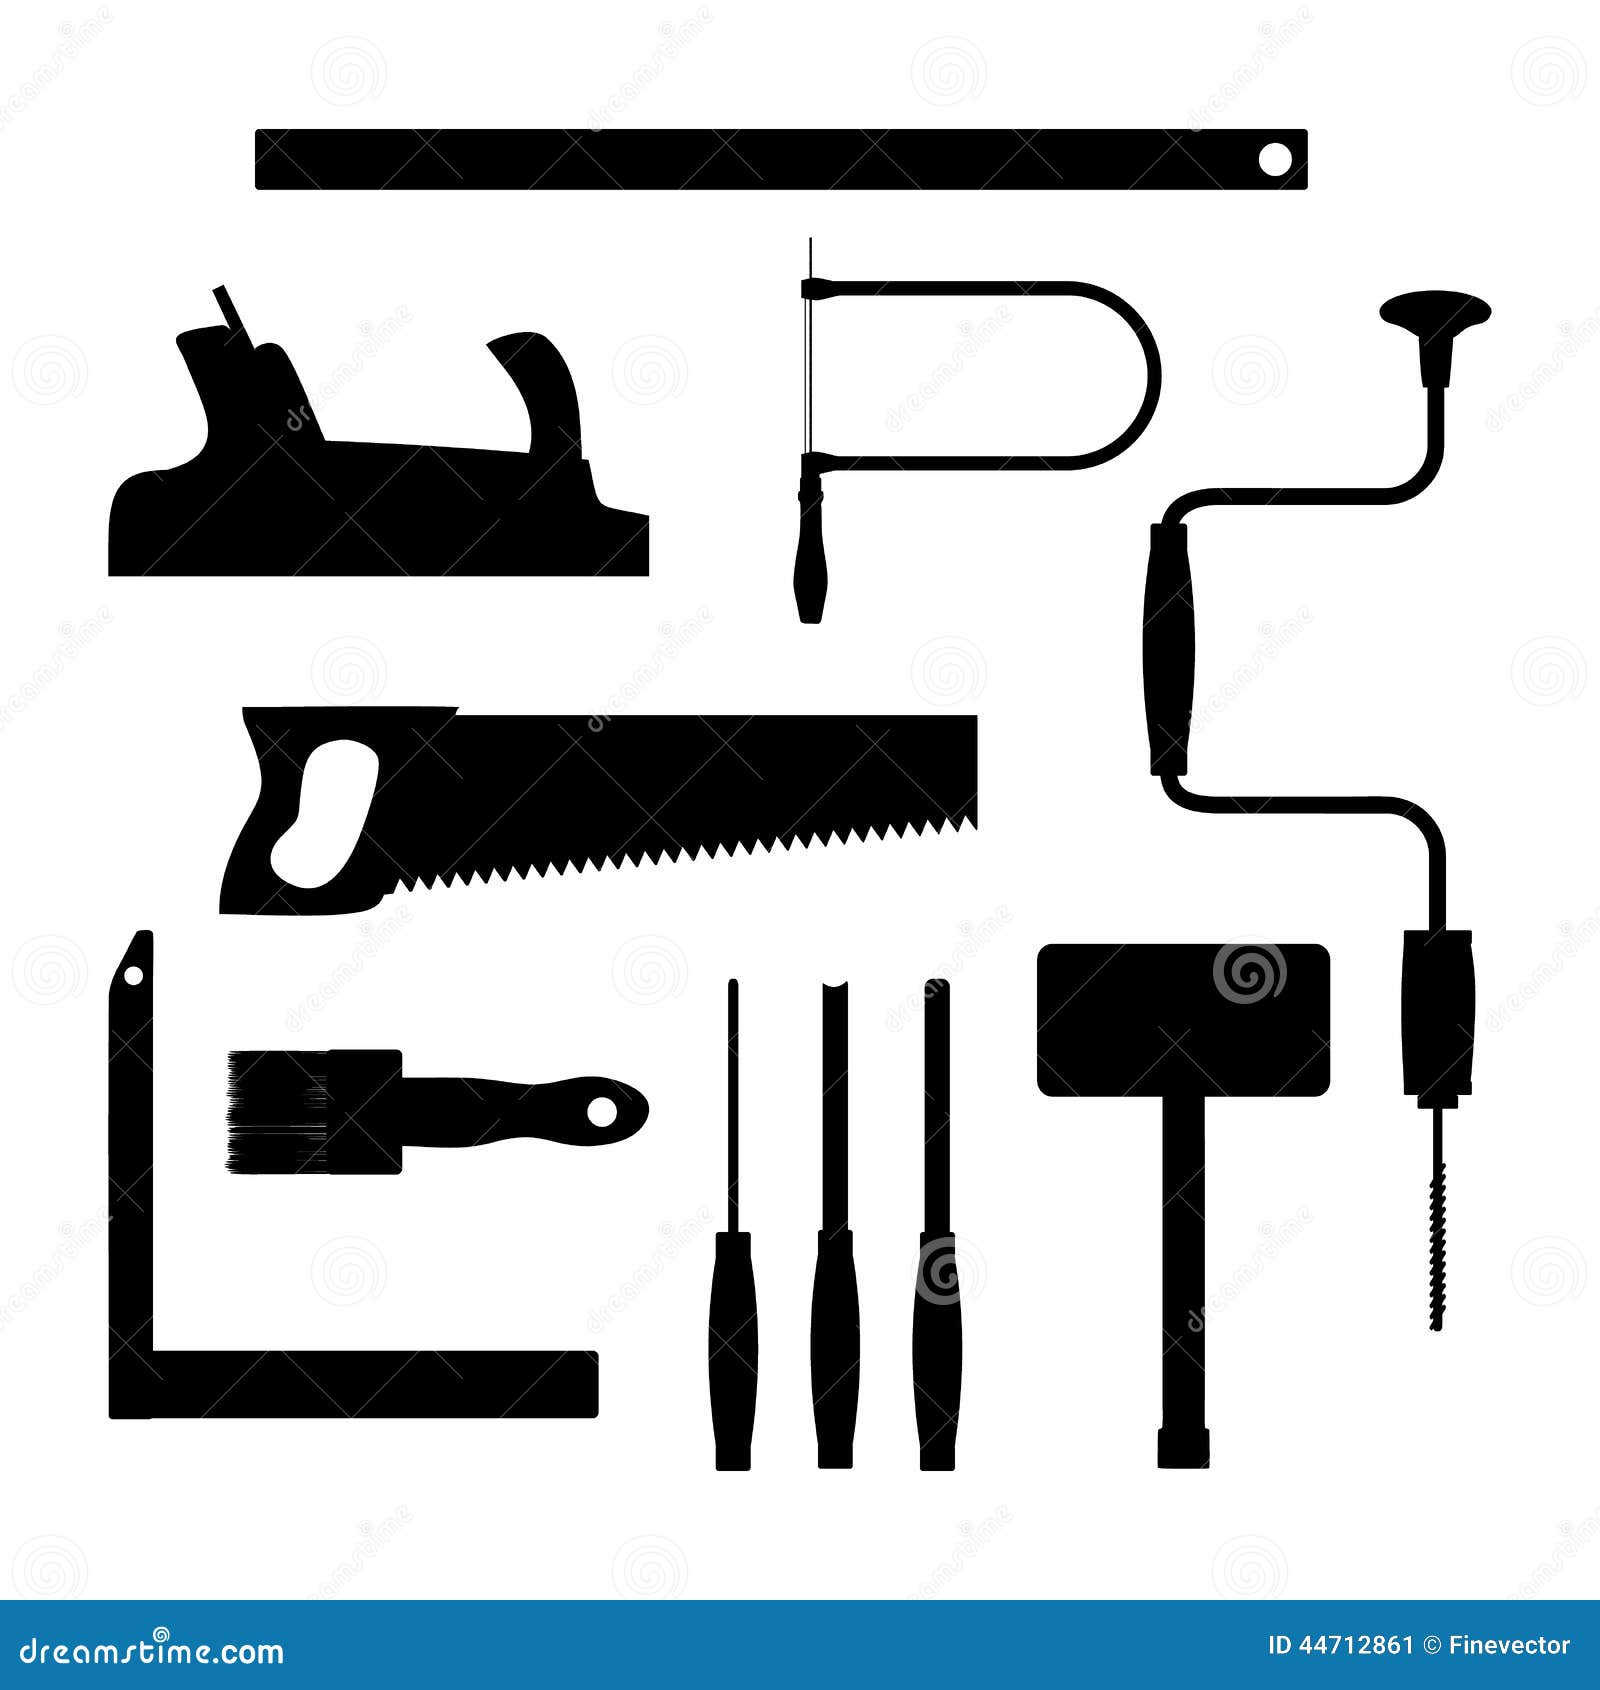 clip art carpentry tools - photo #11